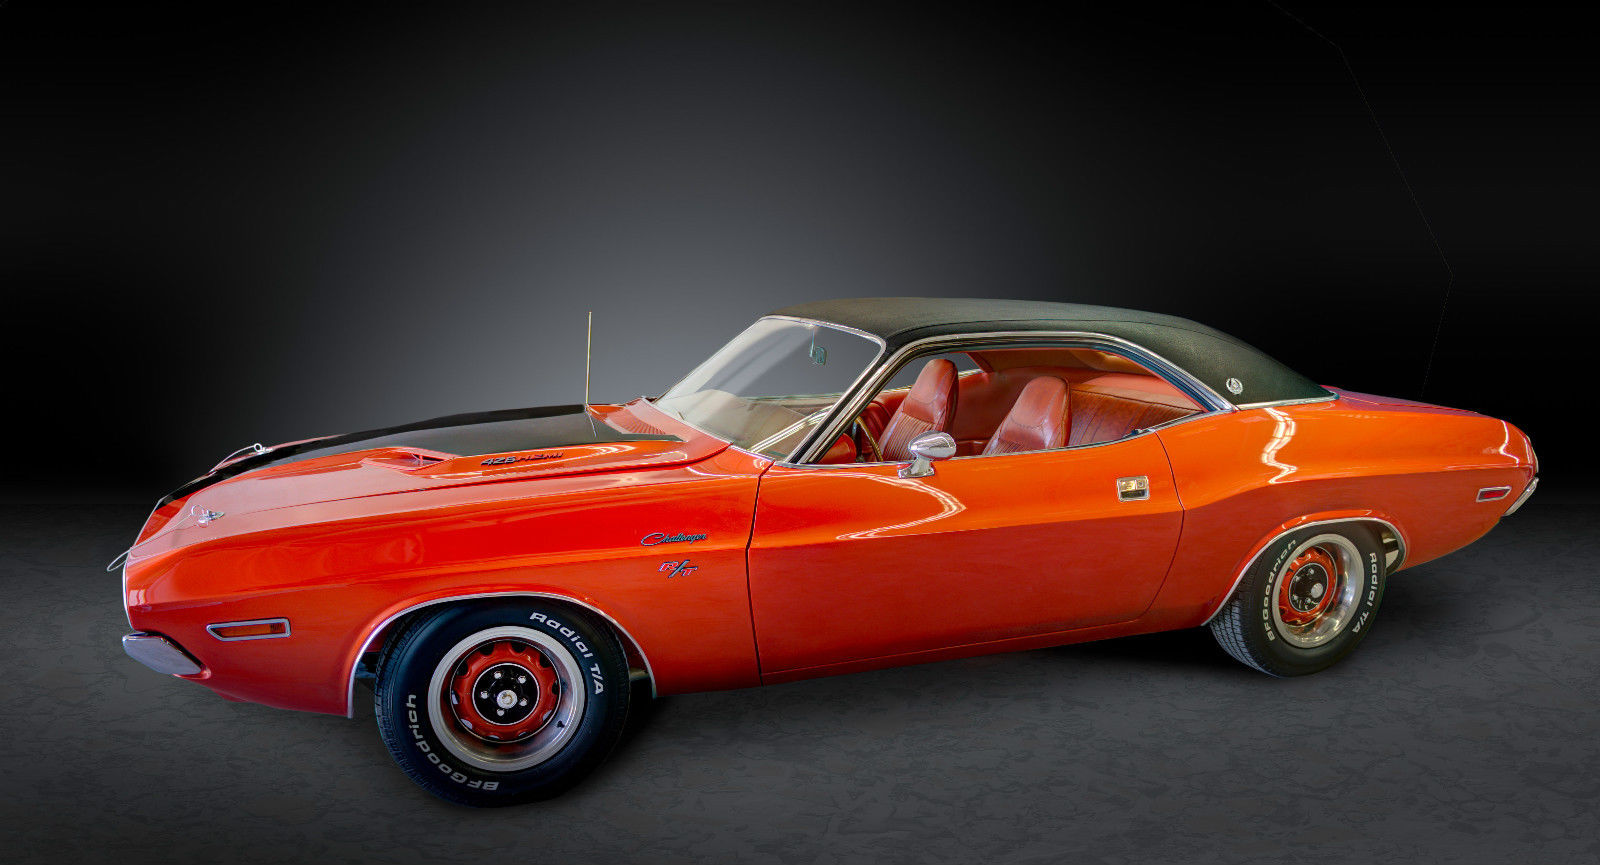 1970 Dodge Challenger RT 2 DR HT Spec Edition 426 Hemi Burnt Orange.